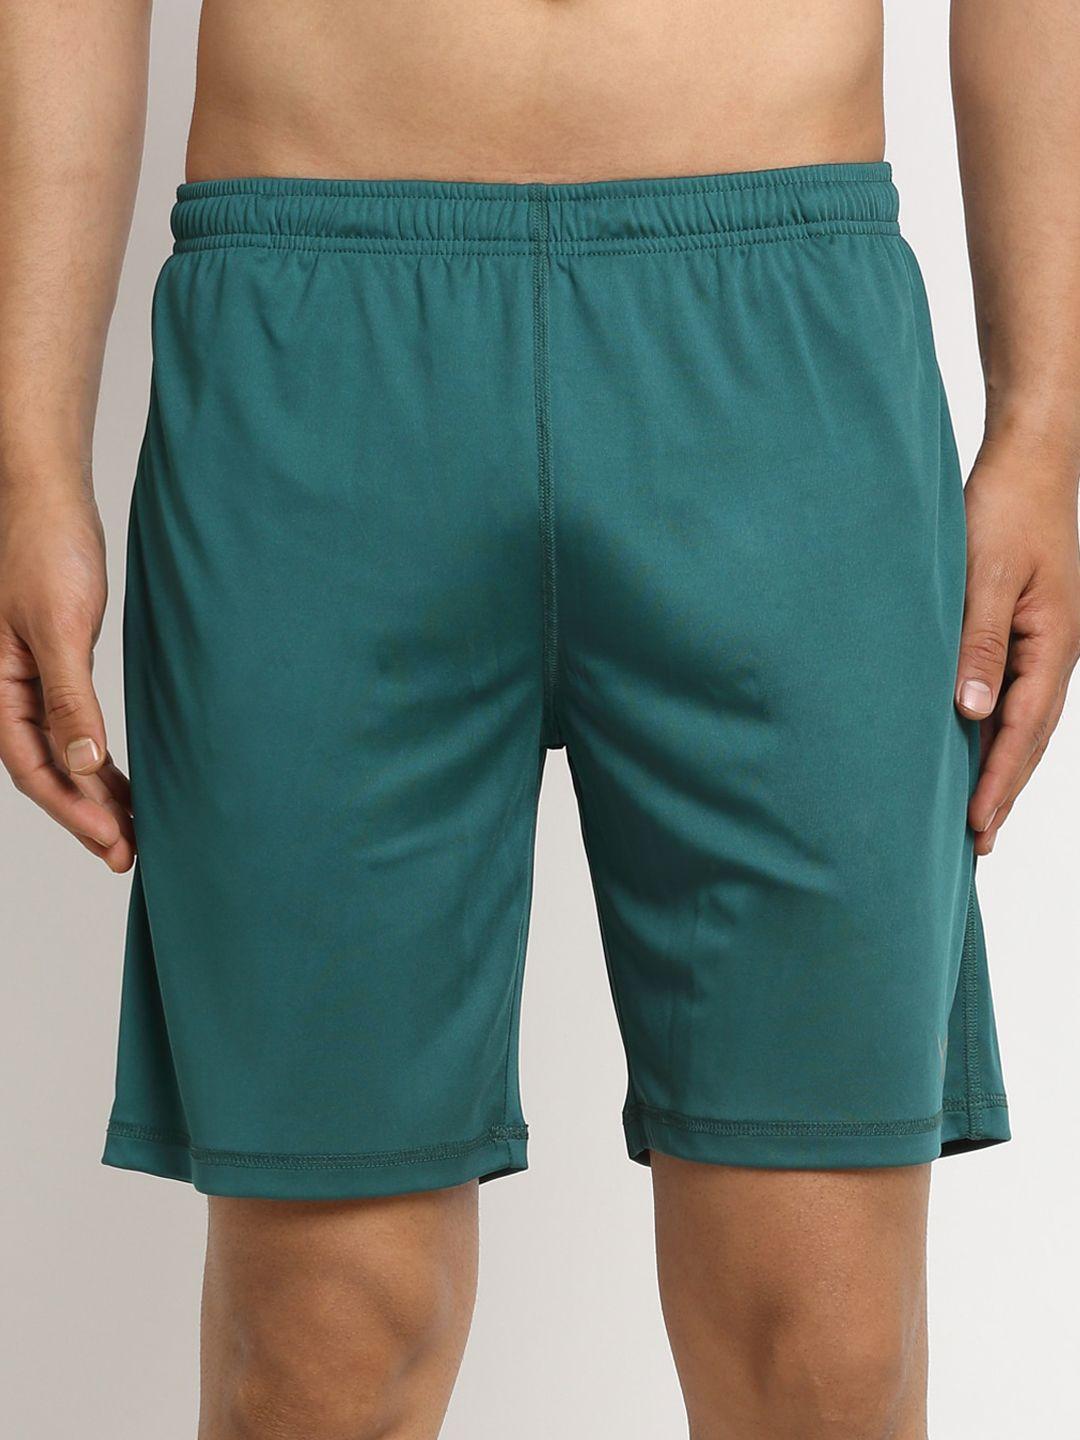 invincible-men-green-mid-rise-sports-shorts